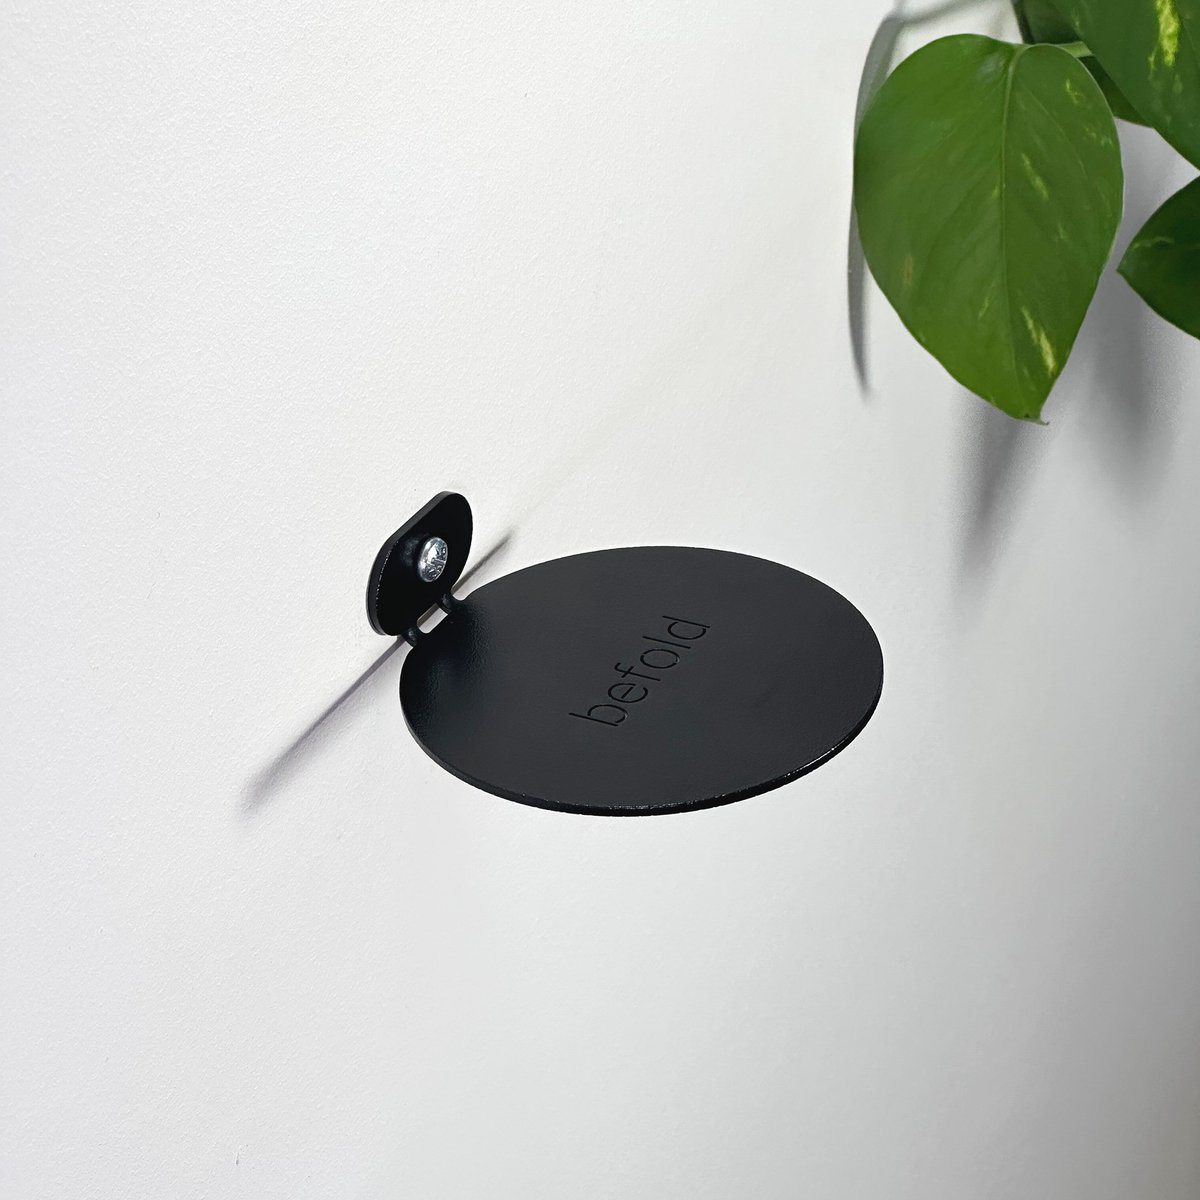 Befold plankje rond, 9cm, wit - minimalistisch, zwevend, onzichtbaar, stalen muur/wand plankjes voor kleine plant, of design ornament